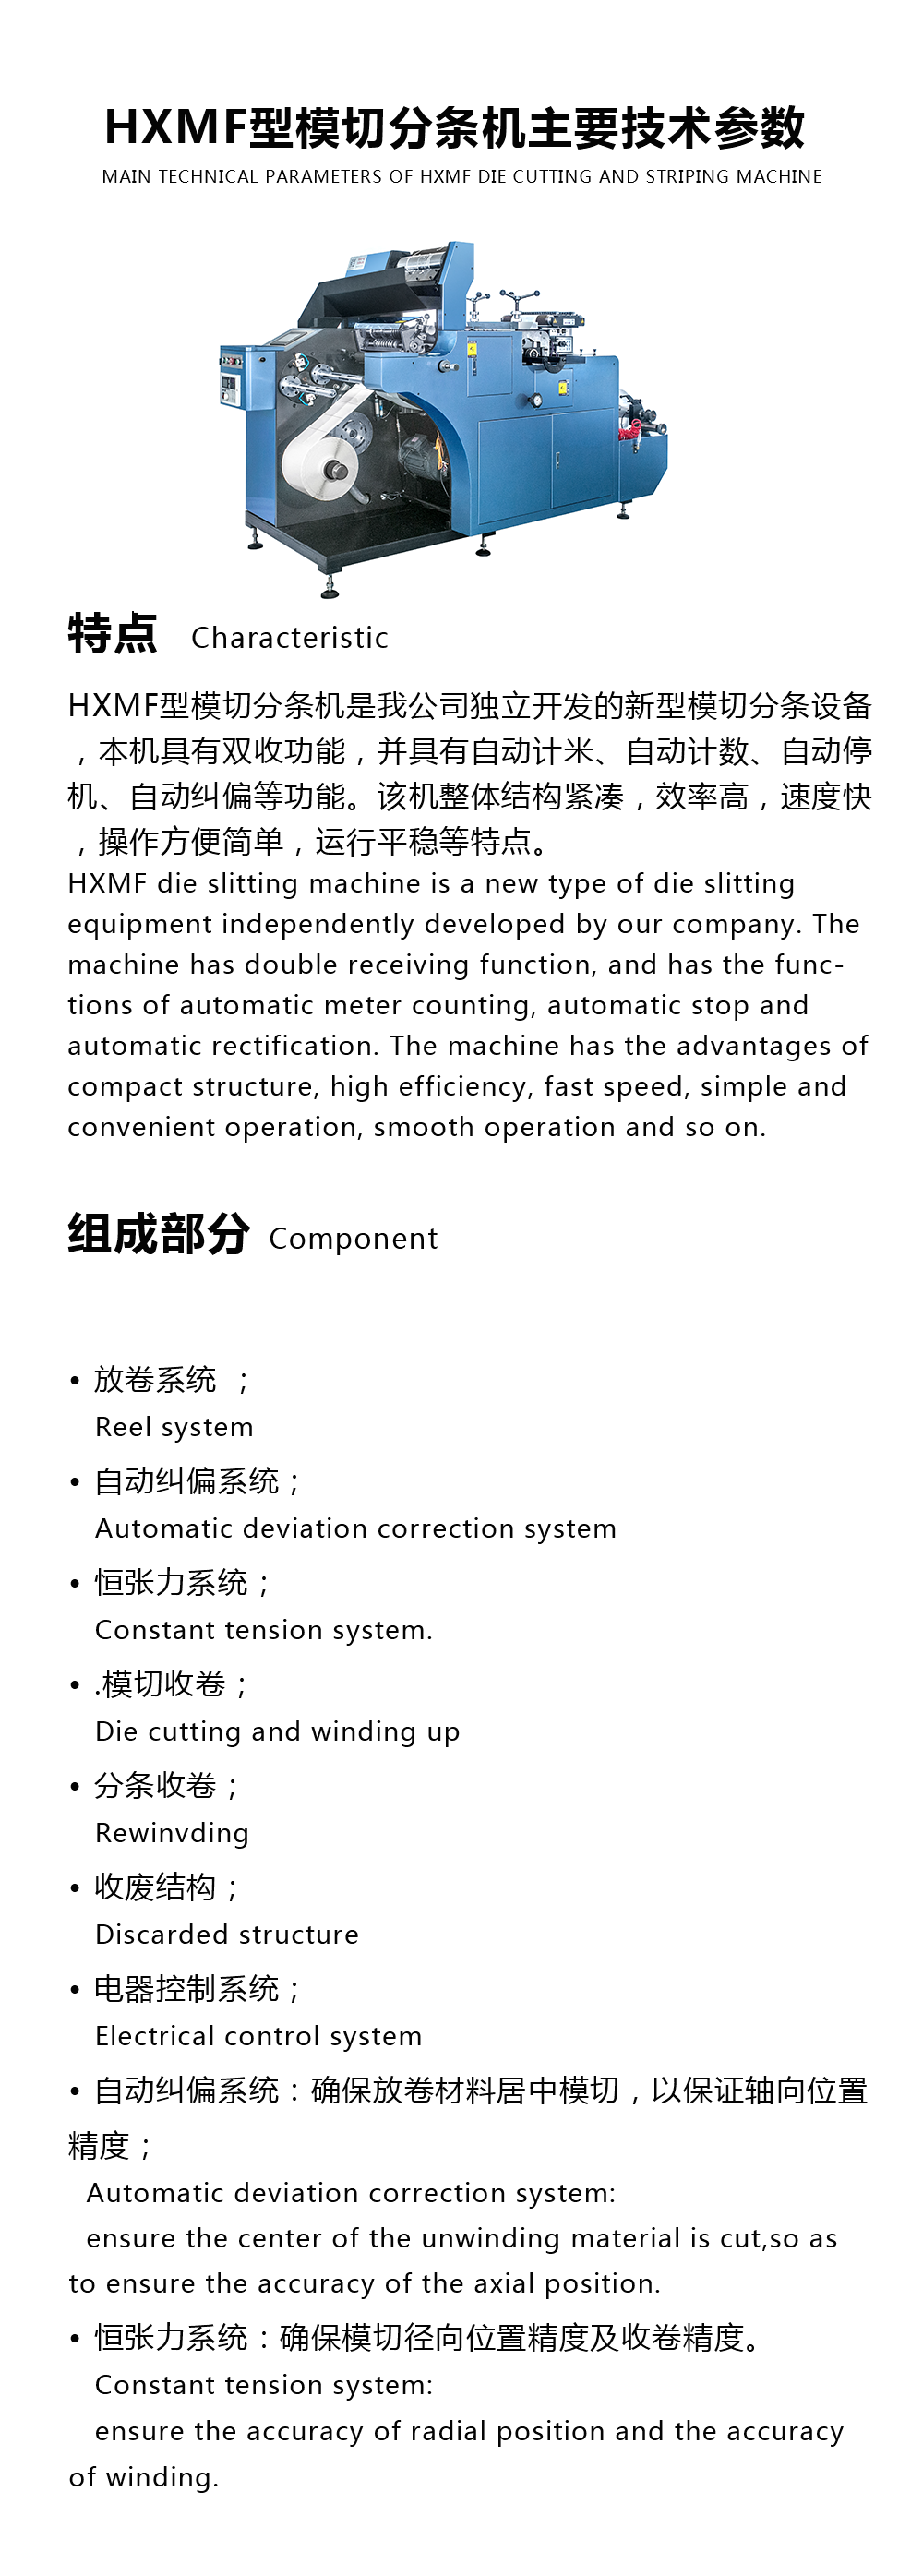 HXMF型模切分条机产品介绍.png